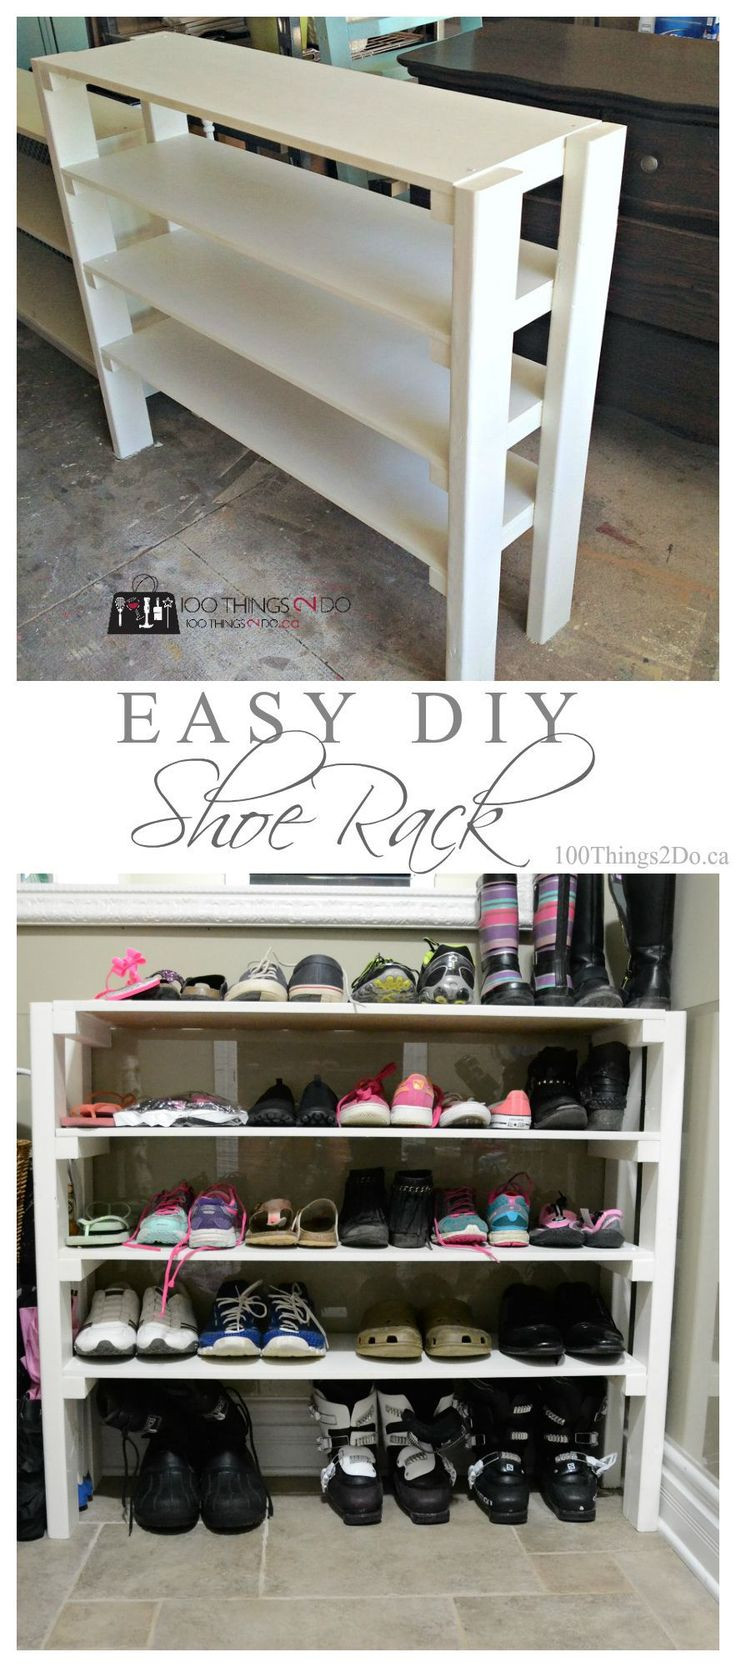 Best ideas about Shoe Rack Ideas DIY
. Save or Pin Best 25 Shoe cubby ideas on Pinterest Now.